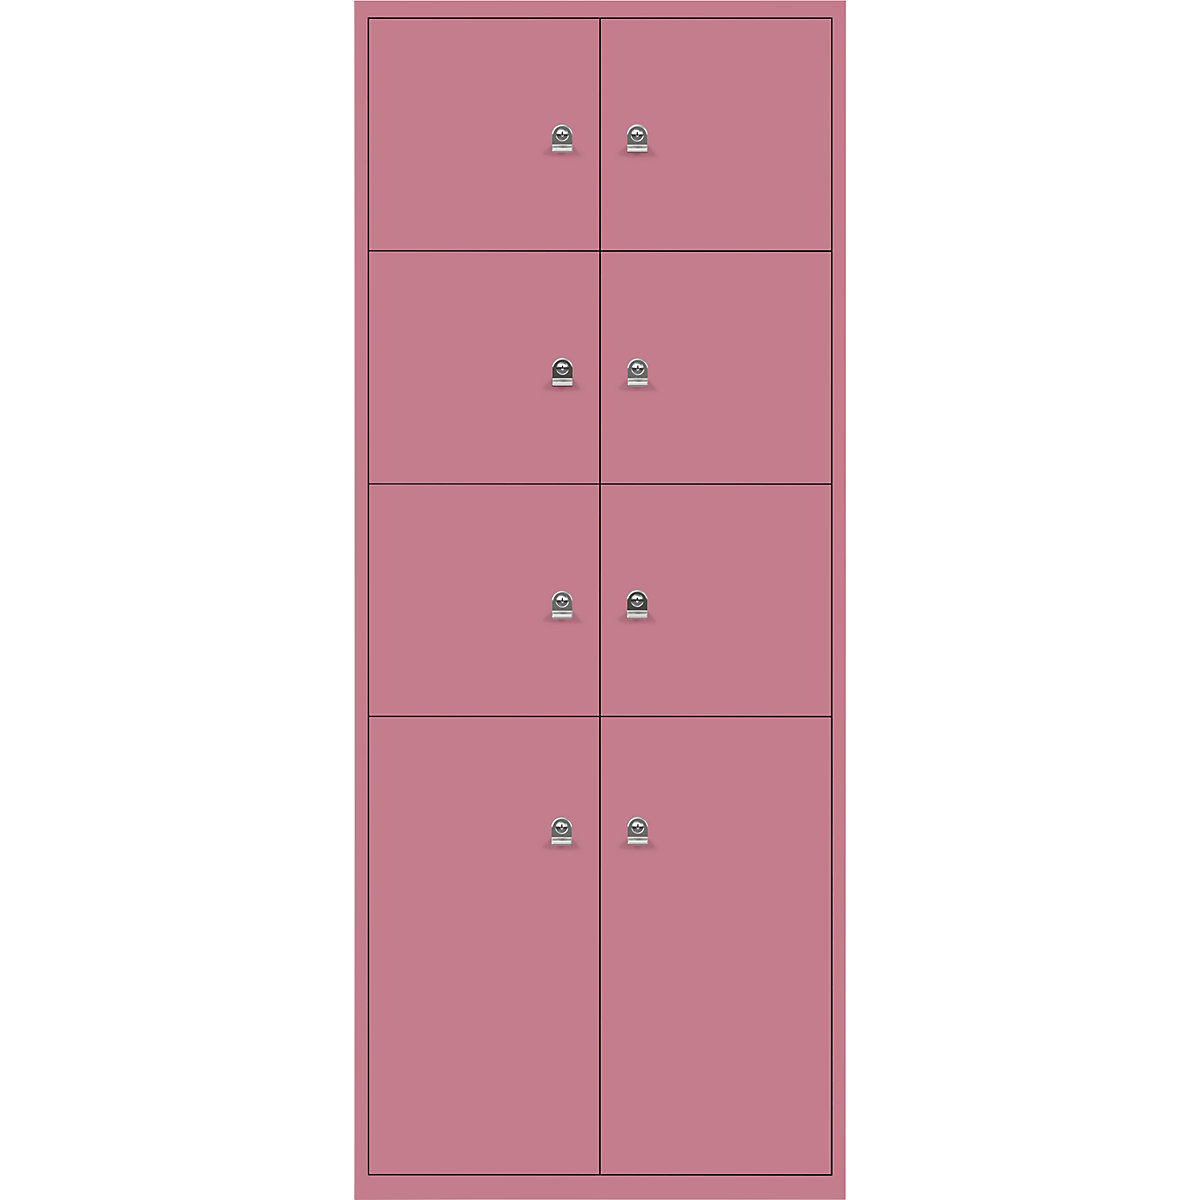 LateralFile™ Lodge – BISLEY, s 8 uzamykacími priehradkami, výška 6 x 375 mm, 2 x 755 mm, ružová-16